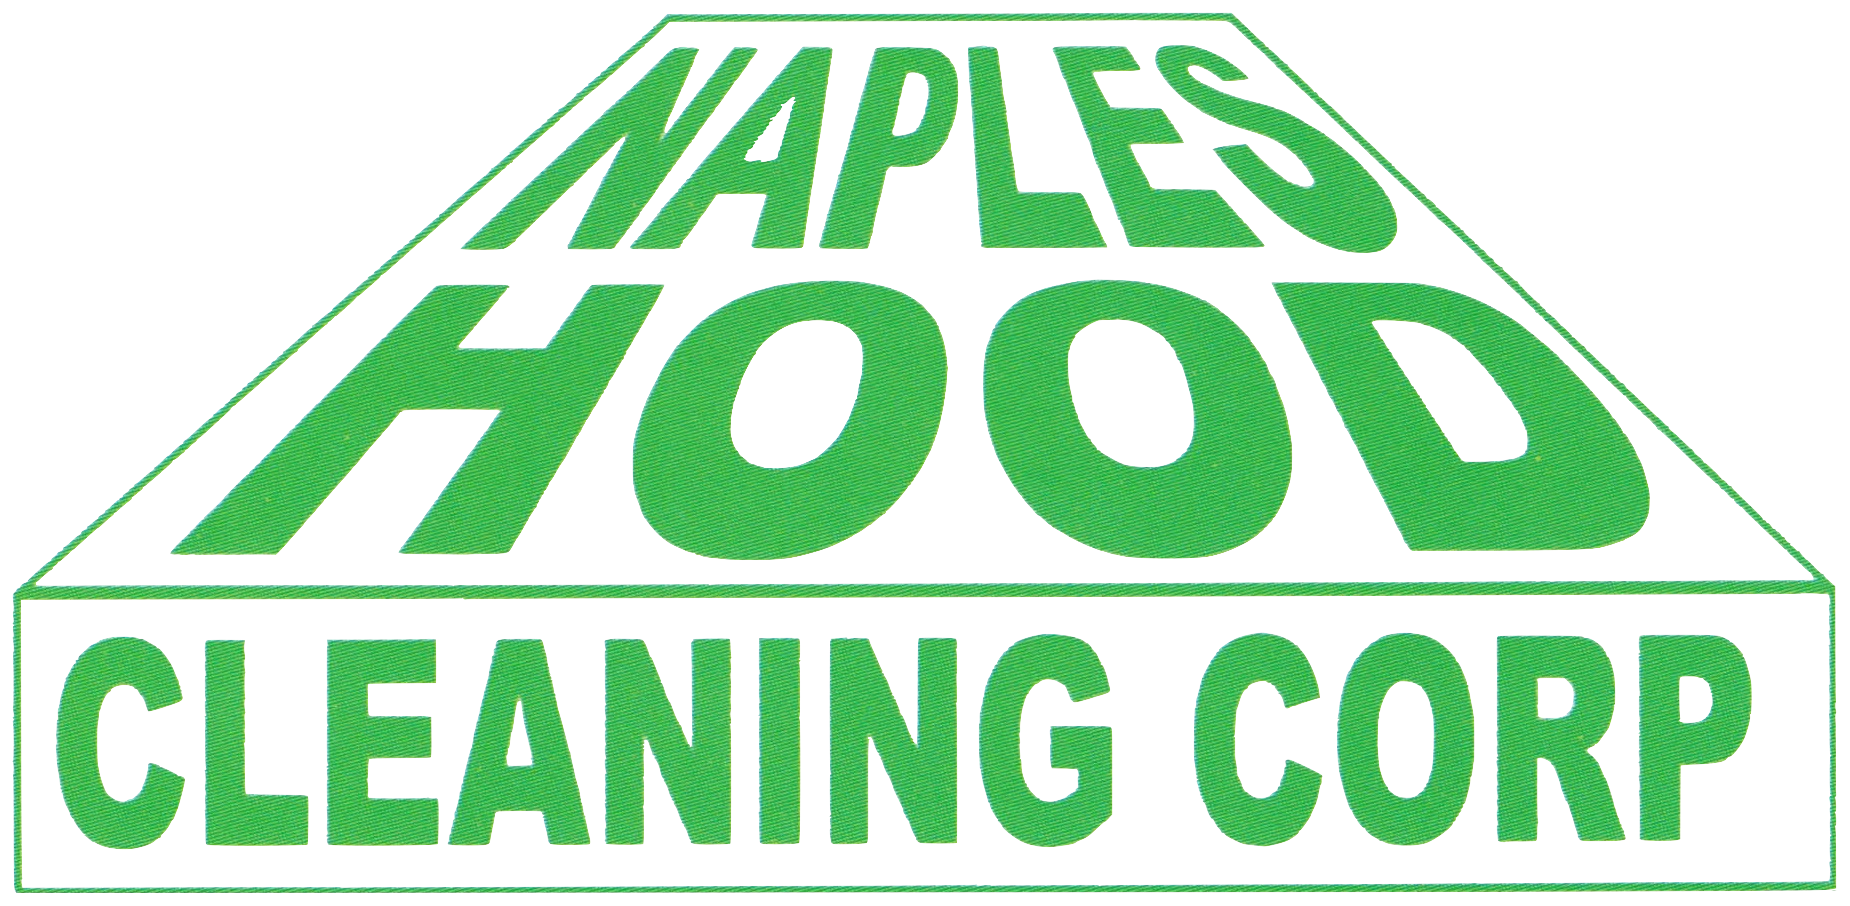 Naples Hood Corp